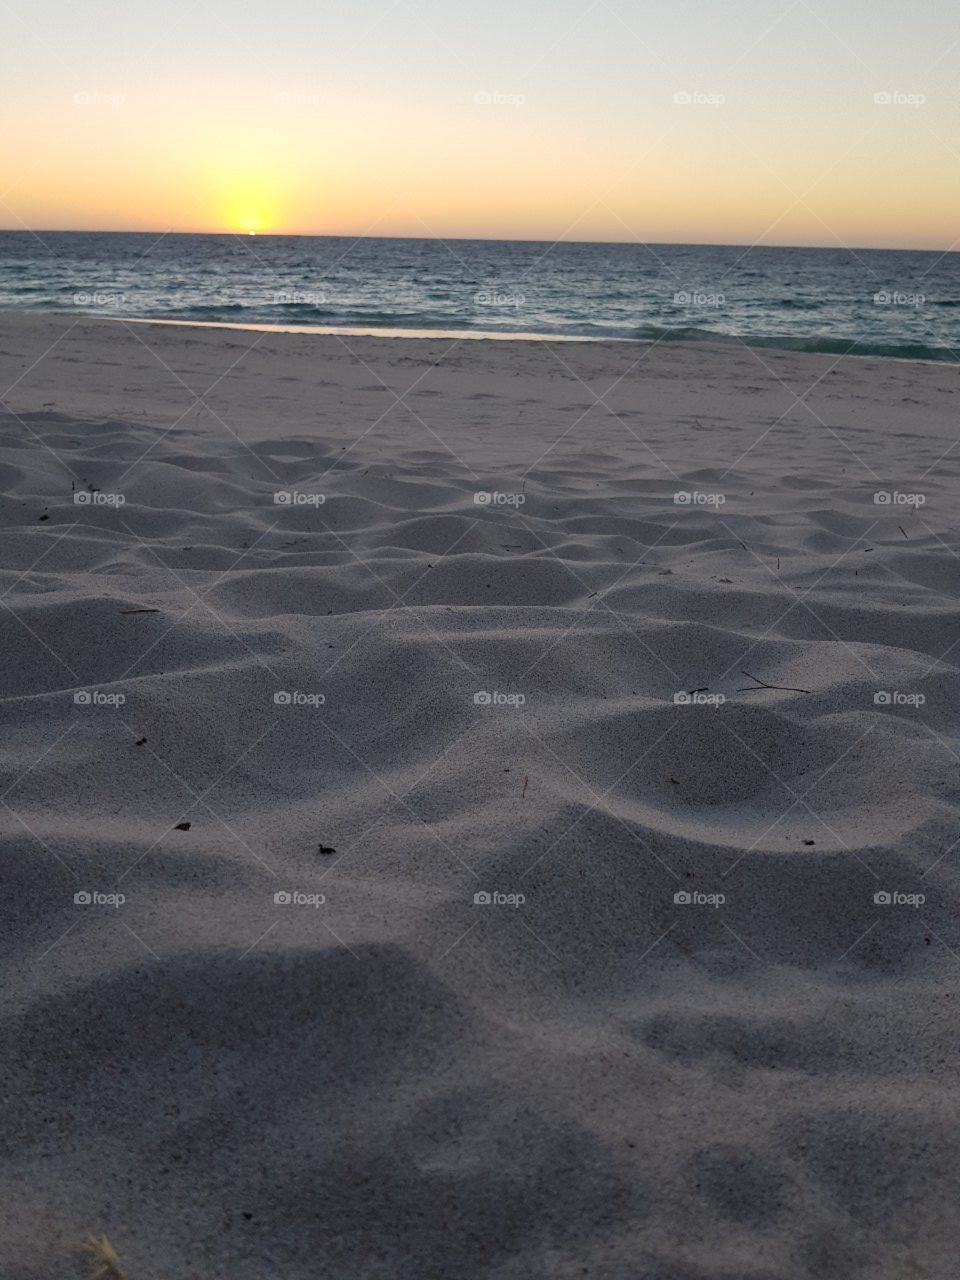 Sandy beach sunset